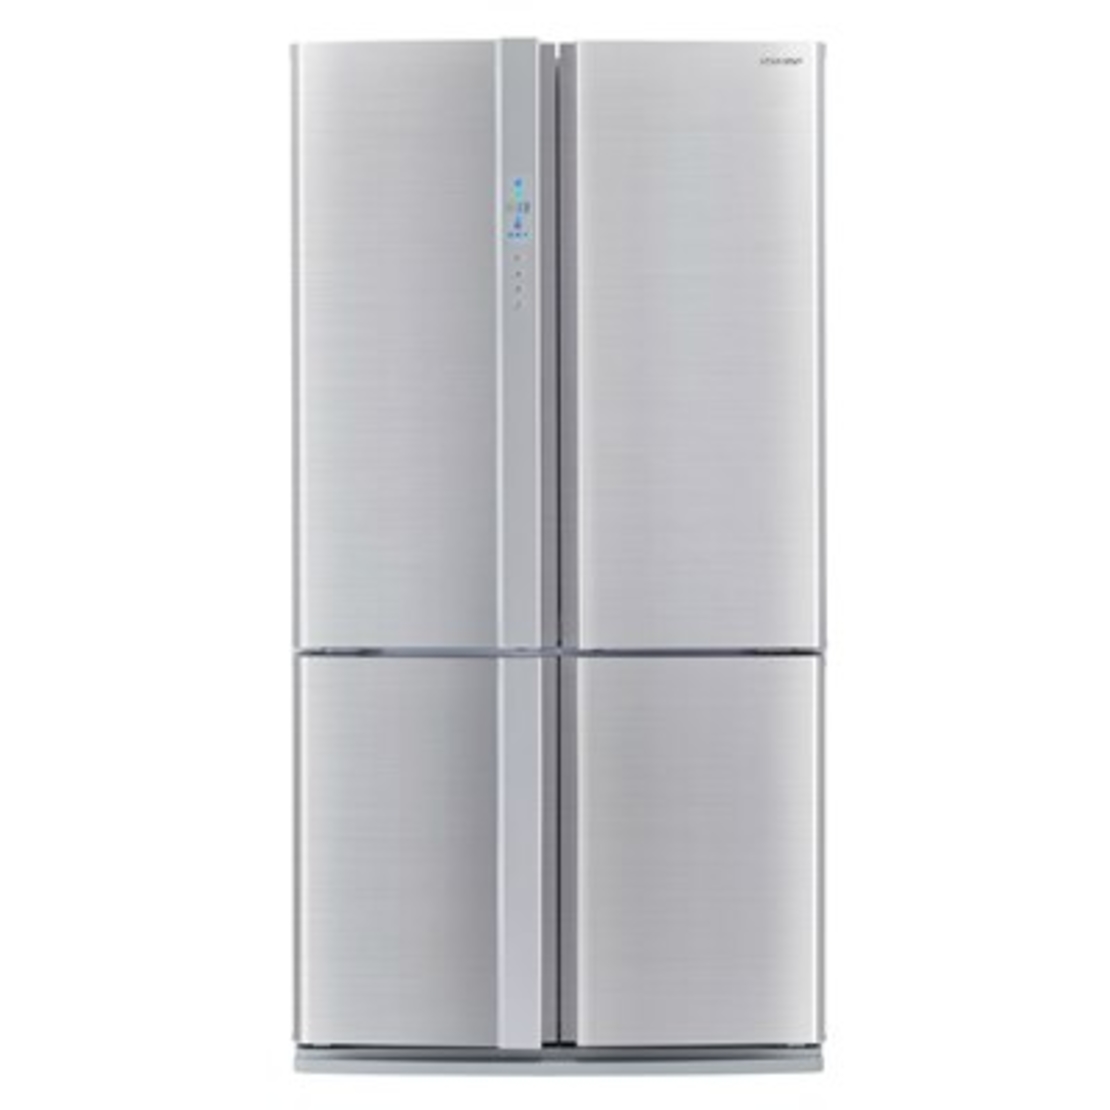 Sharp SJ-8620 bottom freezer refrigerator